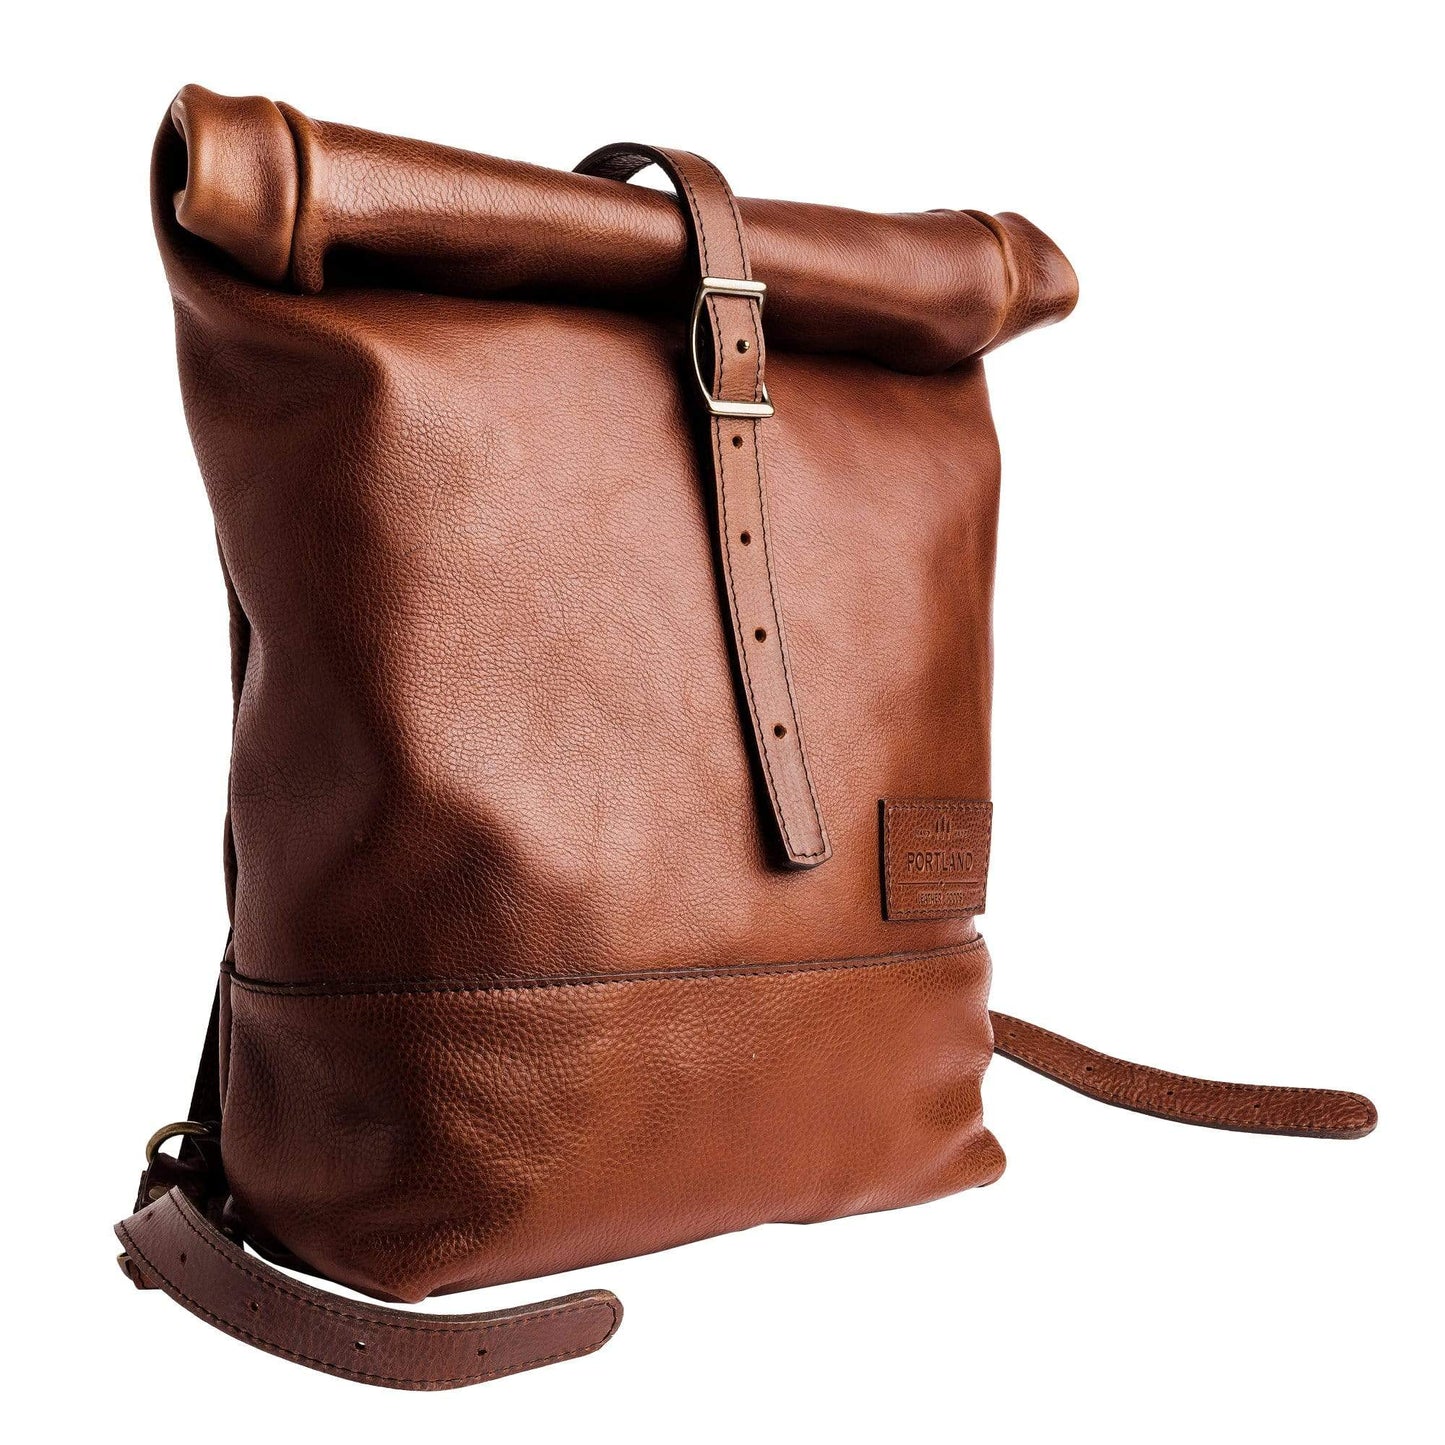 All Color: Nutmeg | rolltop brown backpack